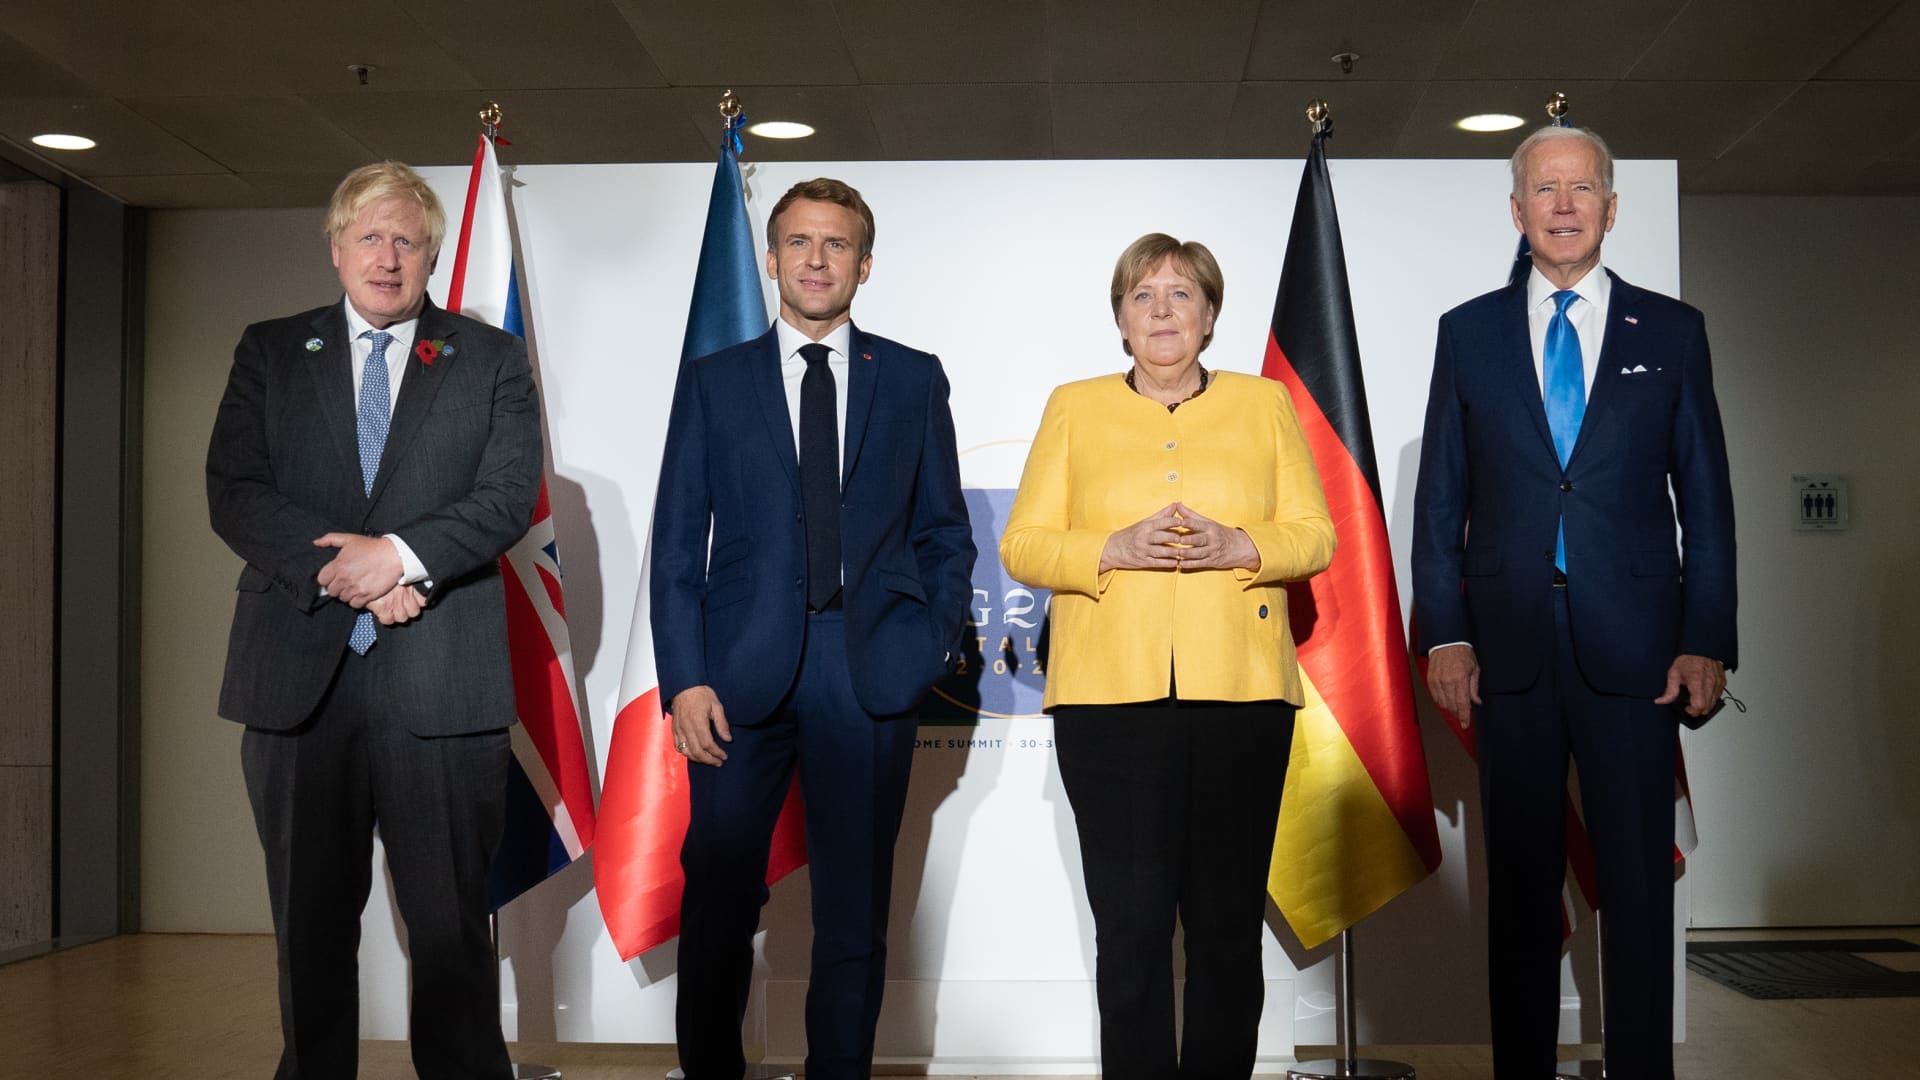 British Prime Minister Boris Johnson, French President Emmanuel Macron, German Chancellor Angela Merkel, and U.S. President Joe Biden, at the G-20 summit on October 30th, 2021 in Rome, Italy.